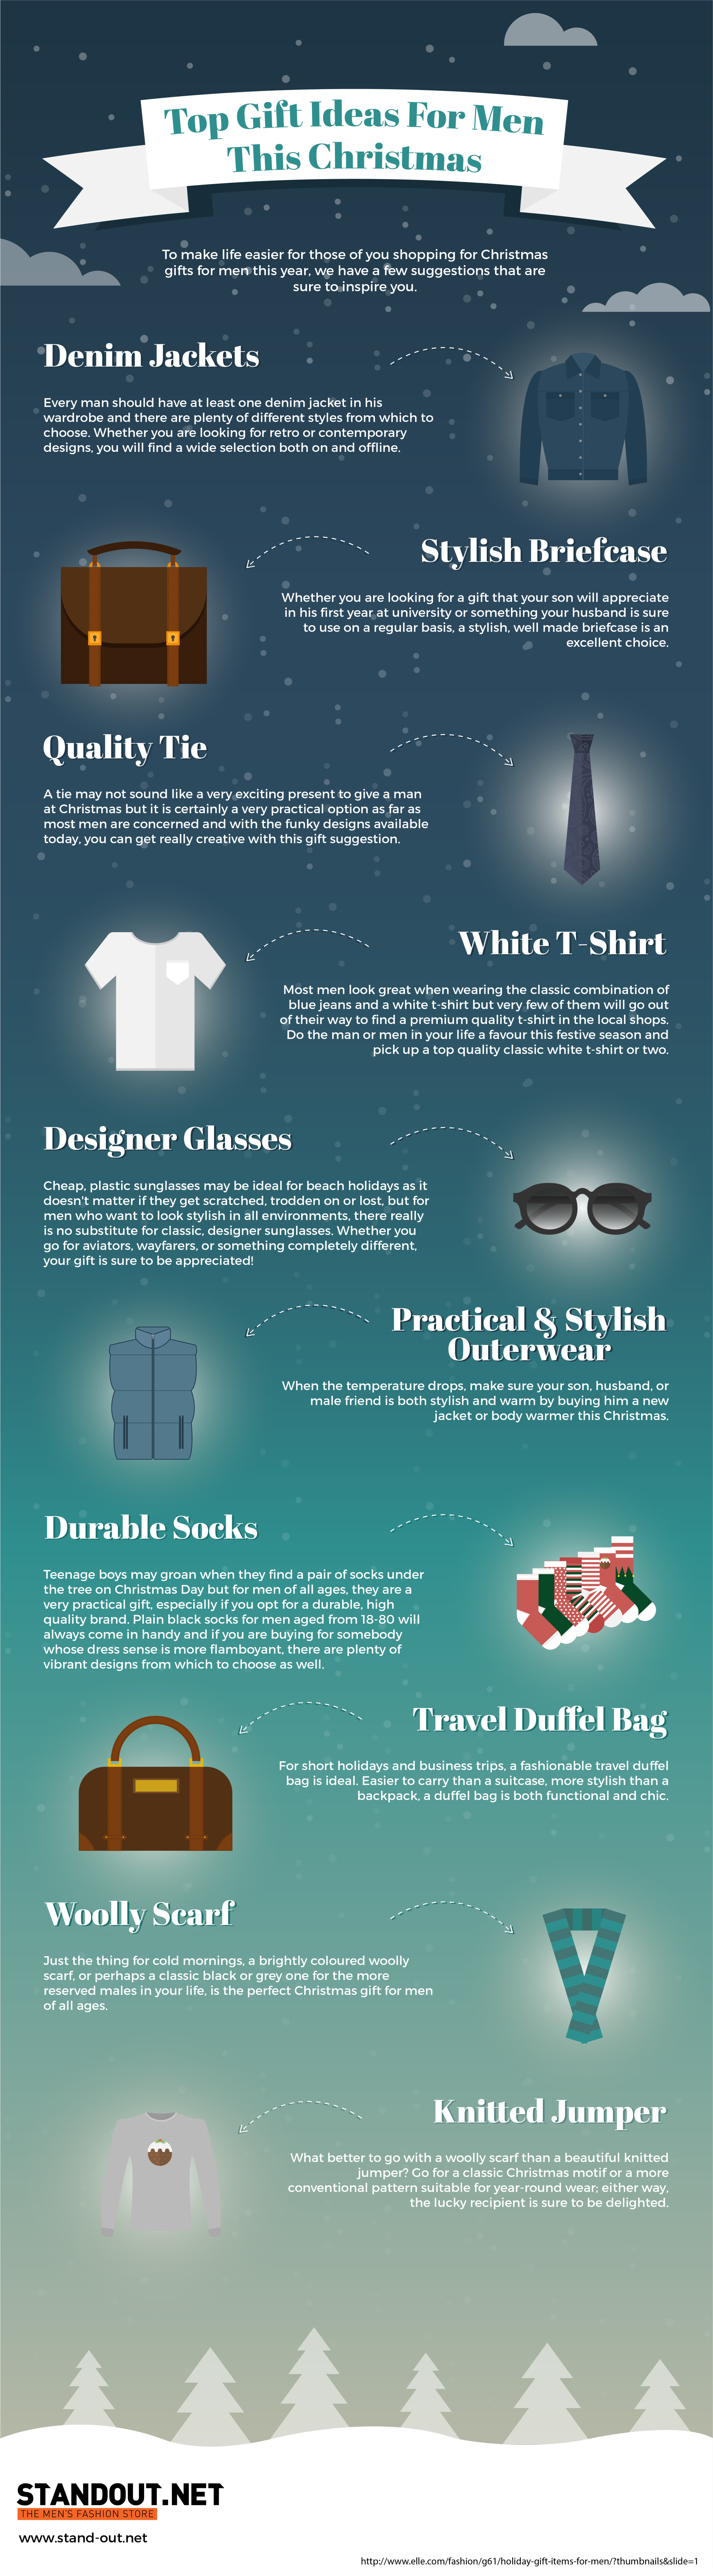 Designer Clothes for Men, Christmas Gift Ideas